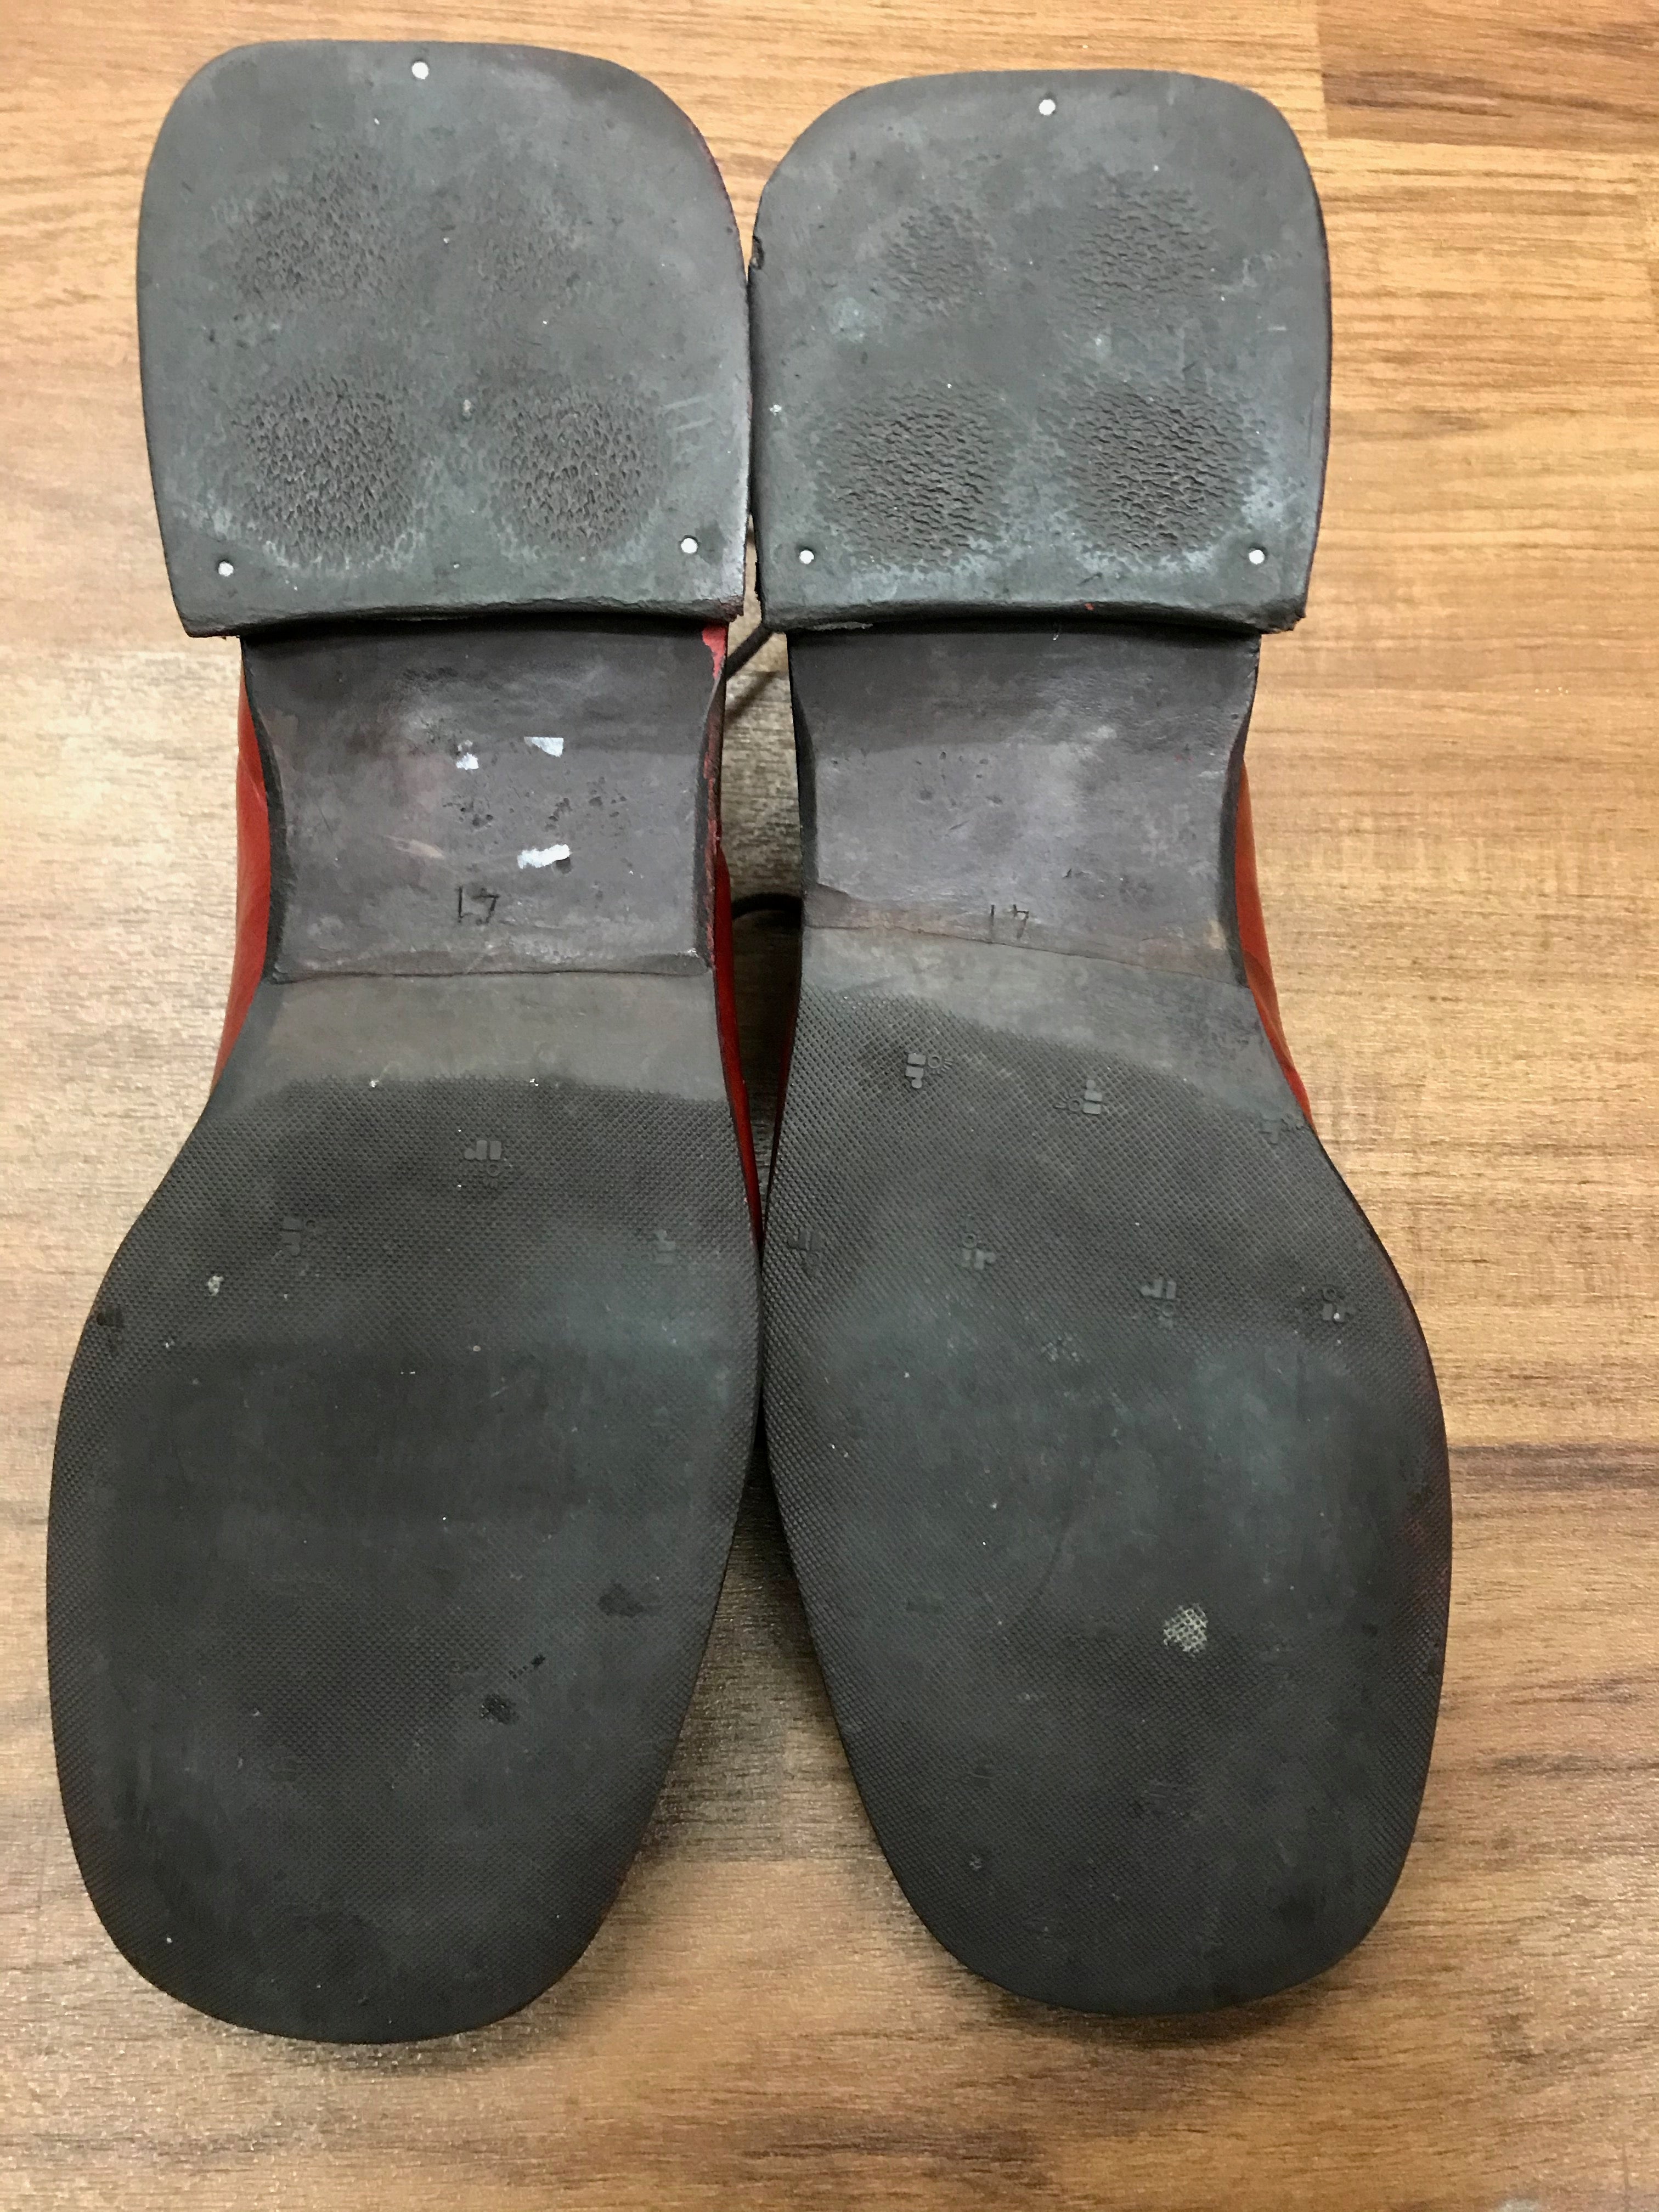 Vintage Schuhe Gr.41 rot